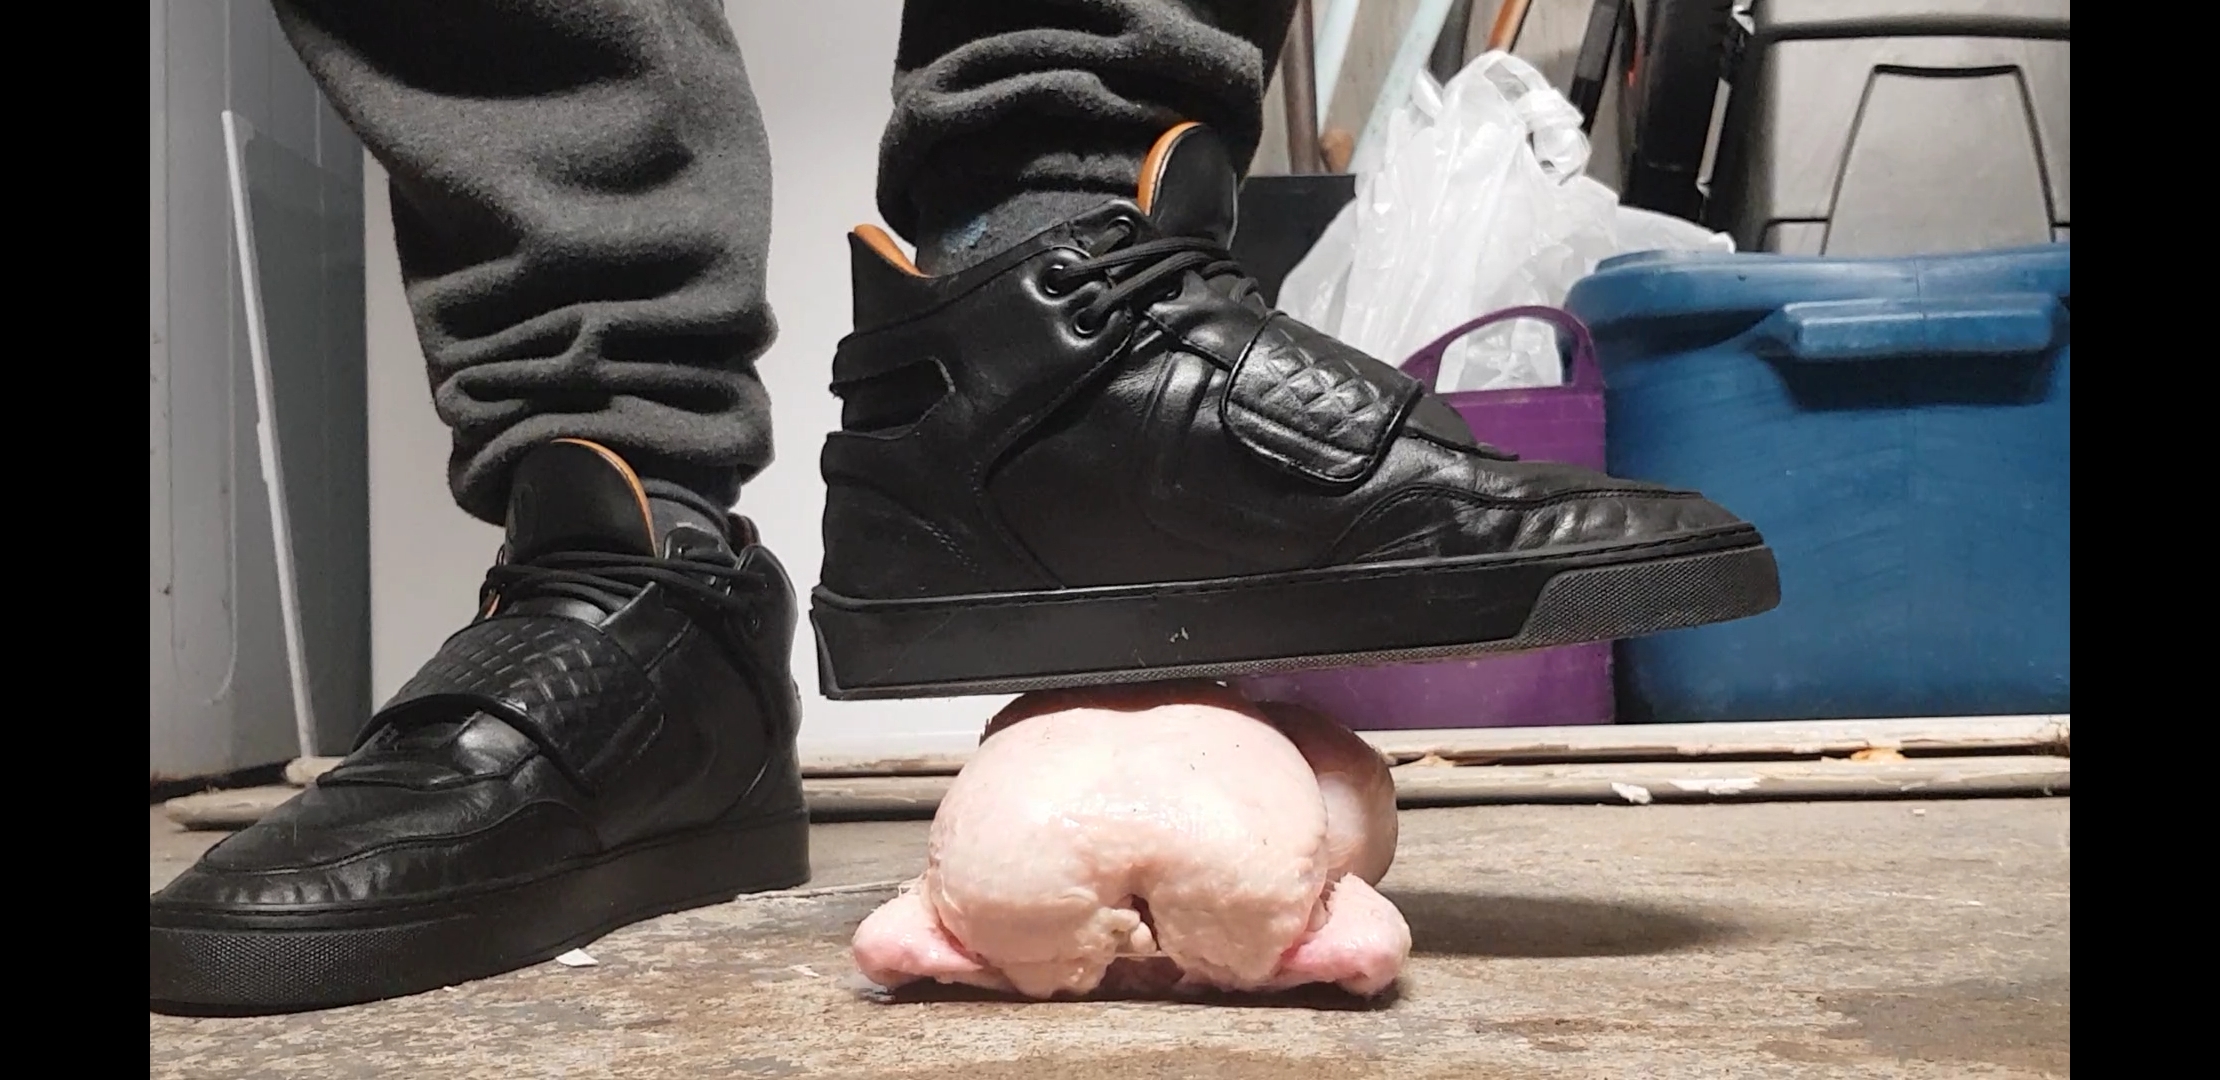 Sneakers crush chicken pt1